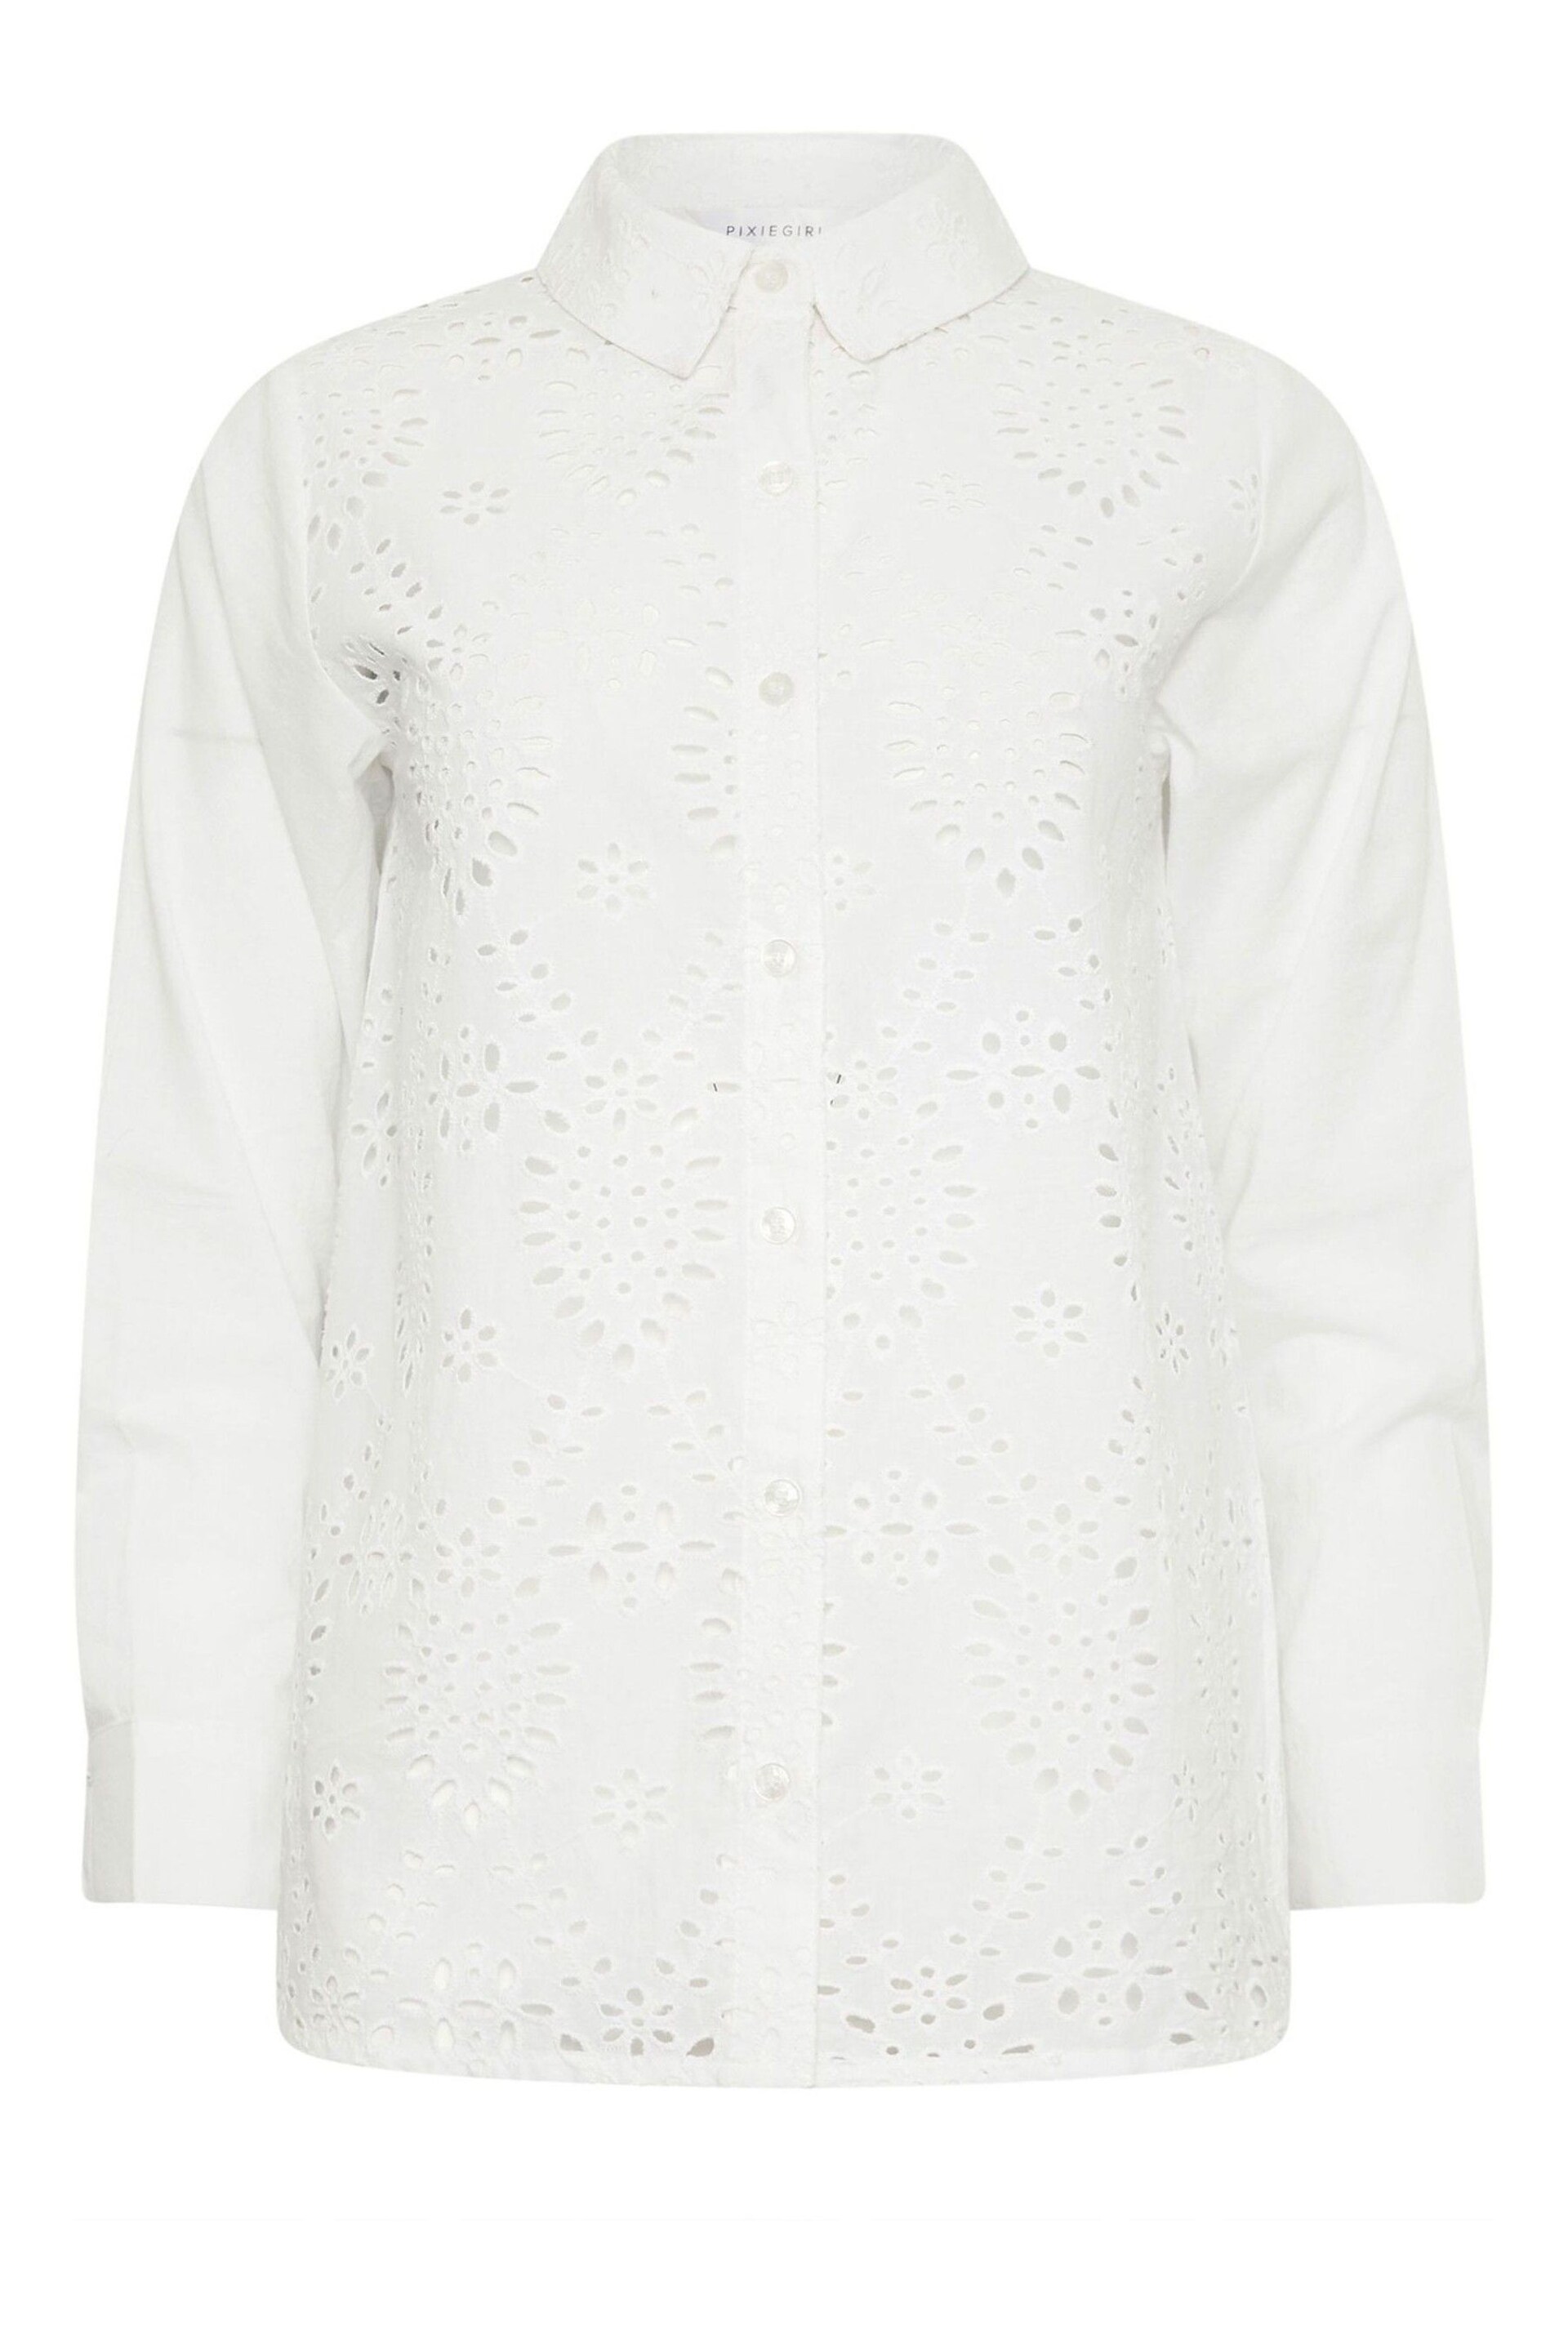 PixieGirl Petite White Brodeire Anglaise Shirt - Image 5 of 5